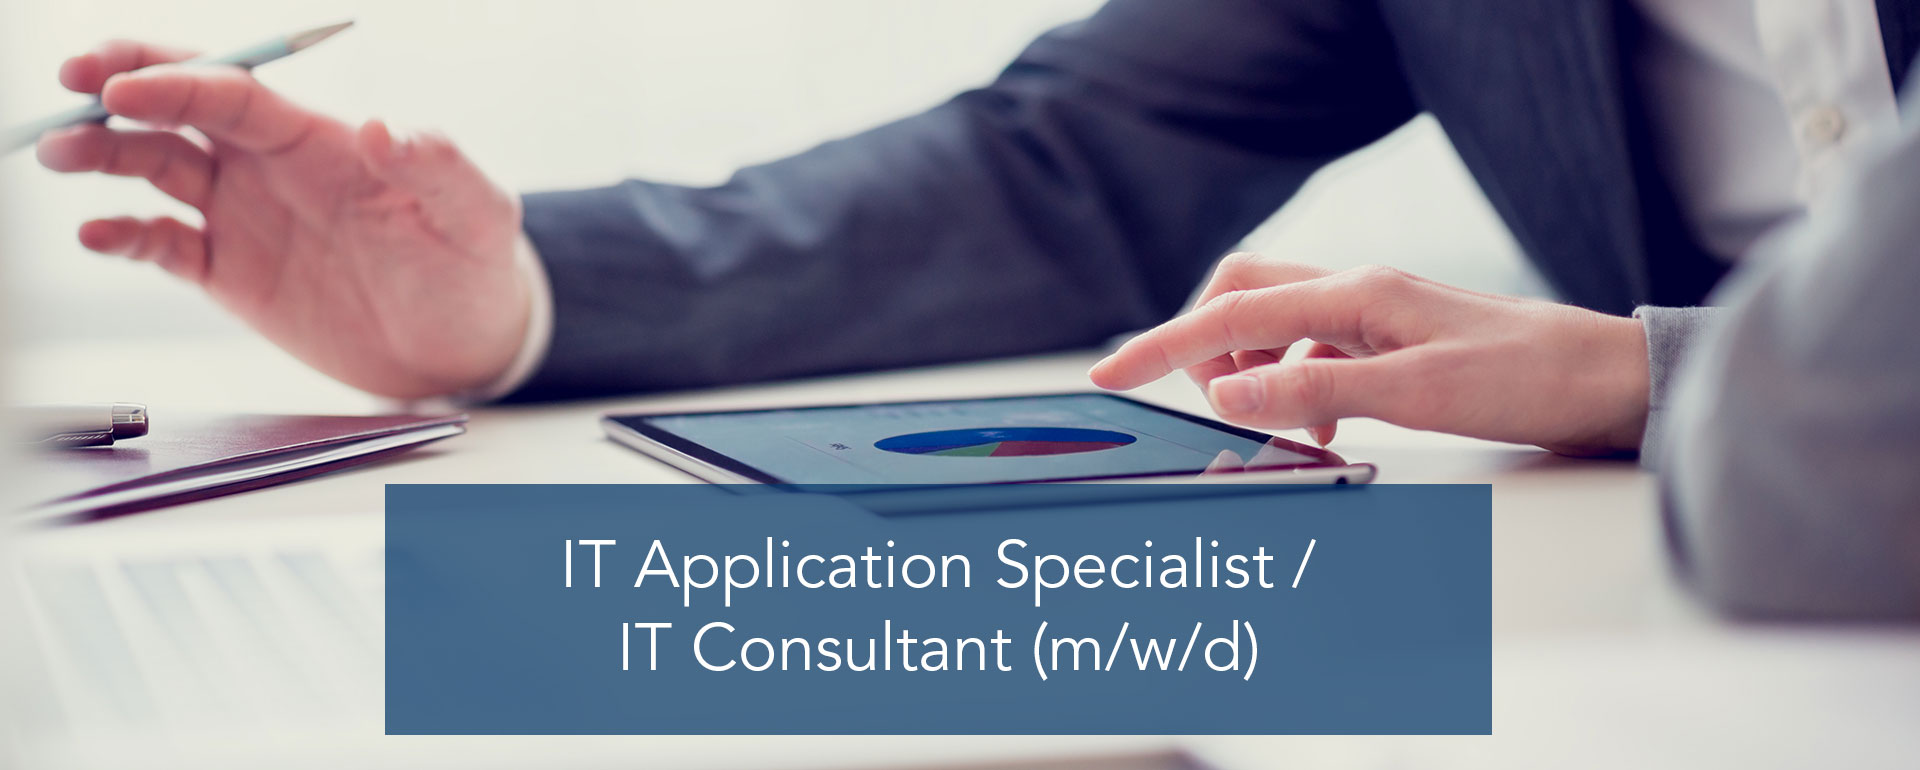 IT Application Specialist / IT Consultant (m/w/d)